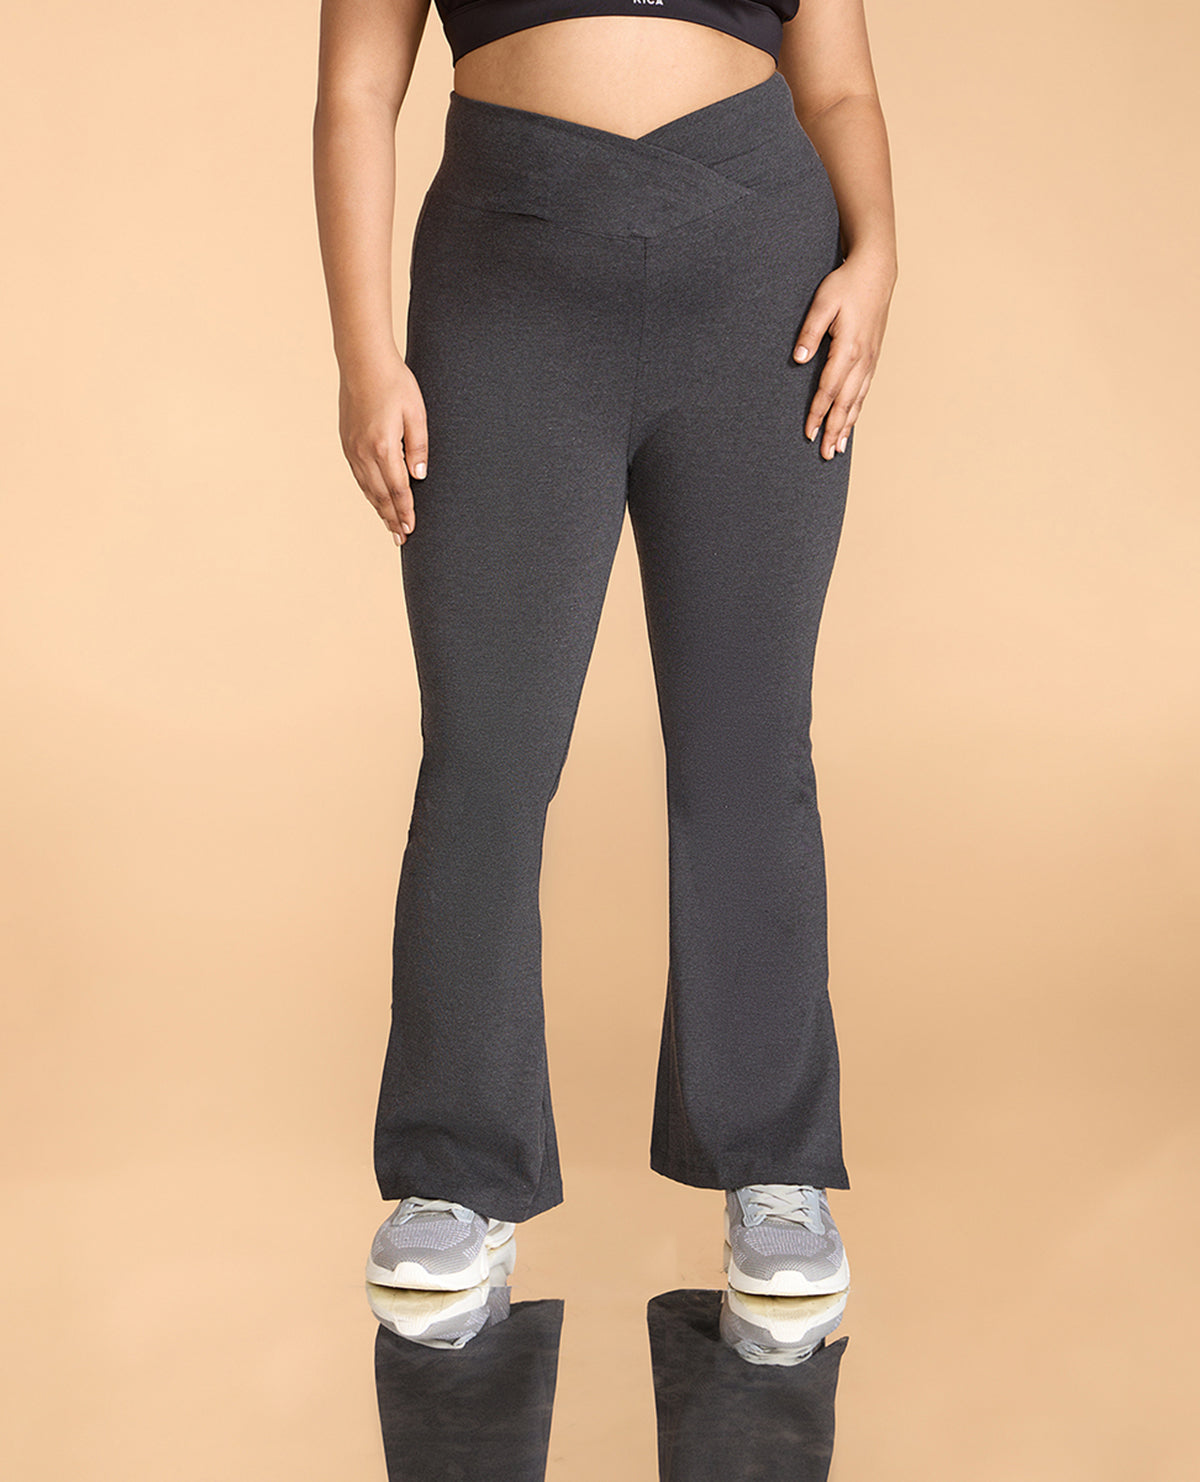 Kourbela Black cotton Compact Chic flare pants < Women's Pants